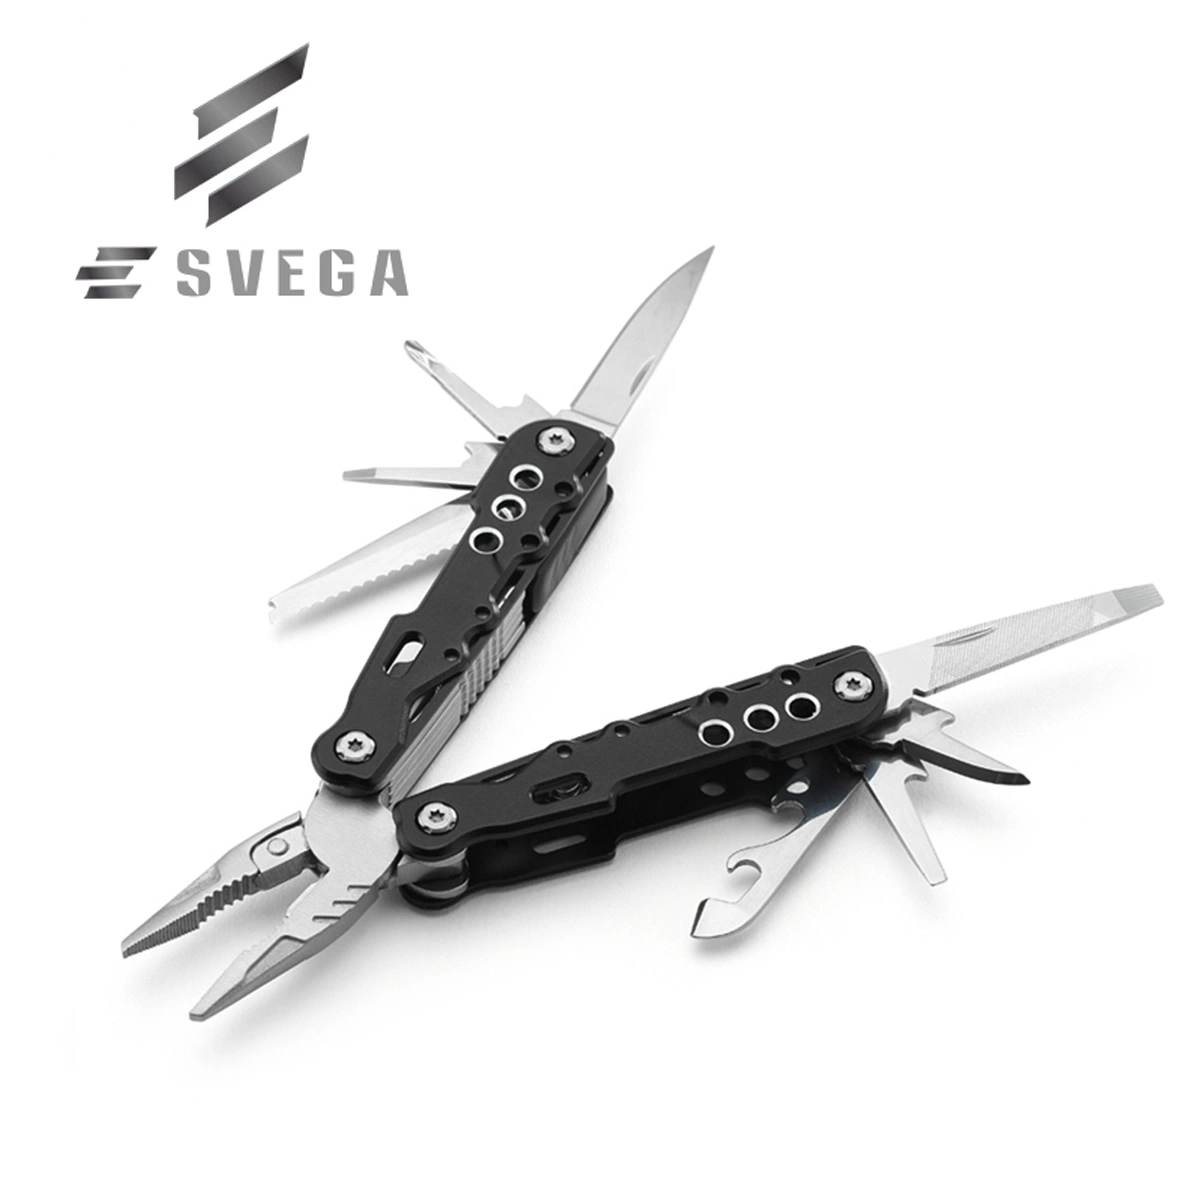 New Arrival Multitool Pliers, Multi-Purpose Pocket Knife Pliers Kit, 420 Durable Stainless Steel Multi-Plier